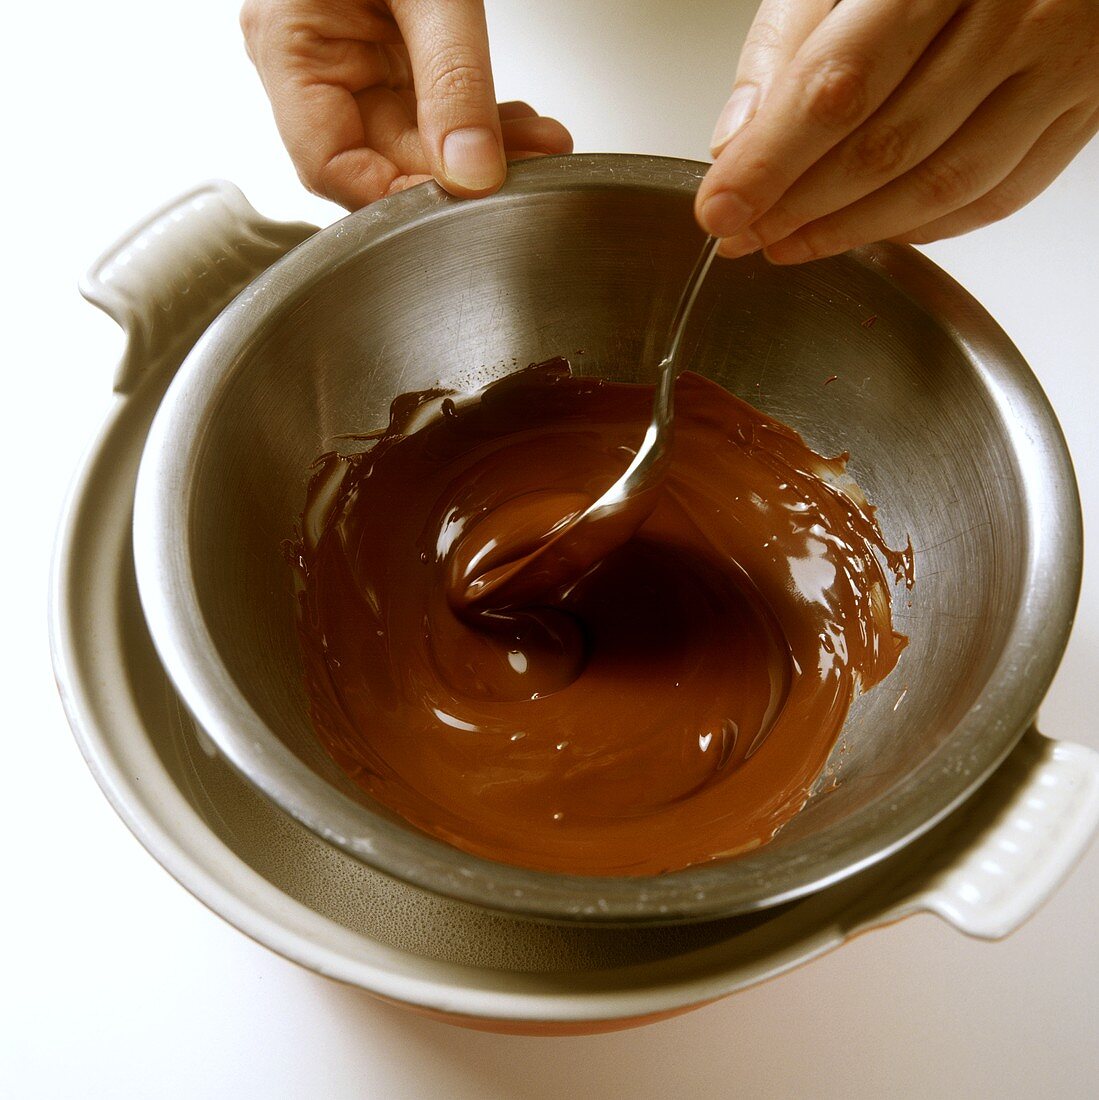 Melting chocolate over bain-marie